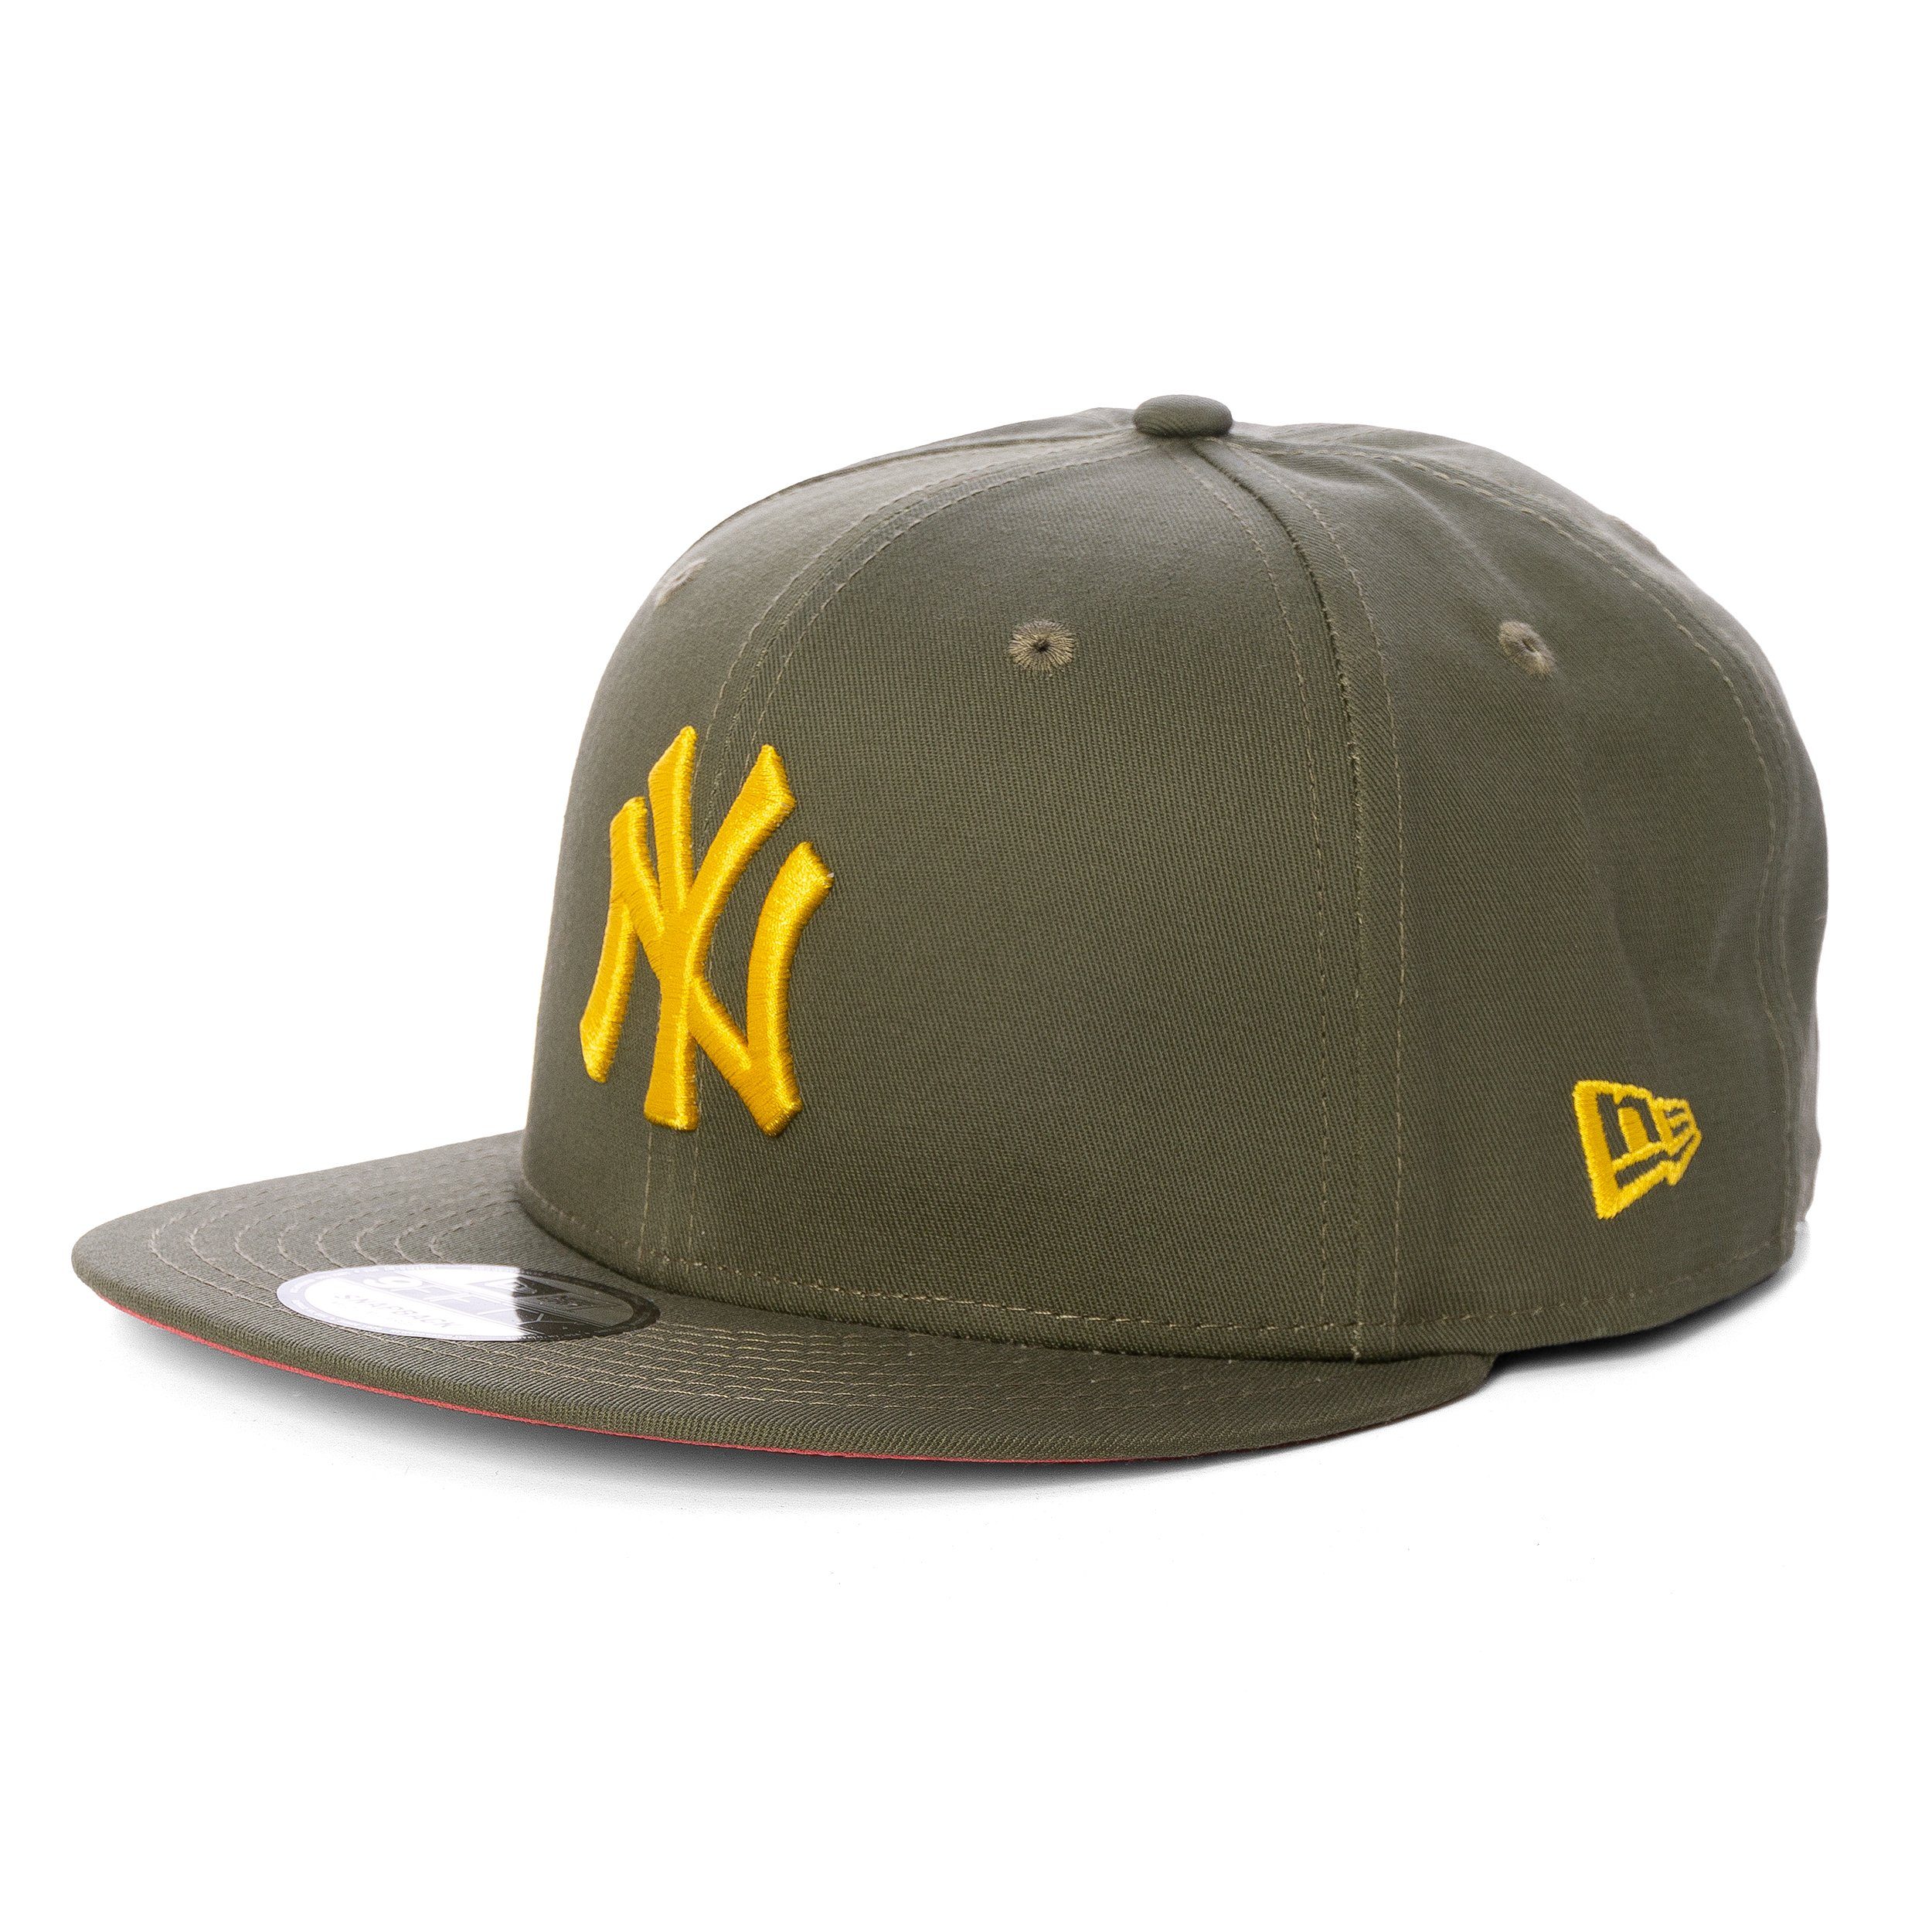 Top-Universität New Era Baseball (1-St) York Cap 9Fifty Yankees New New Era Cap